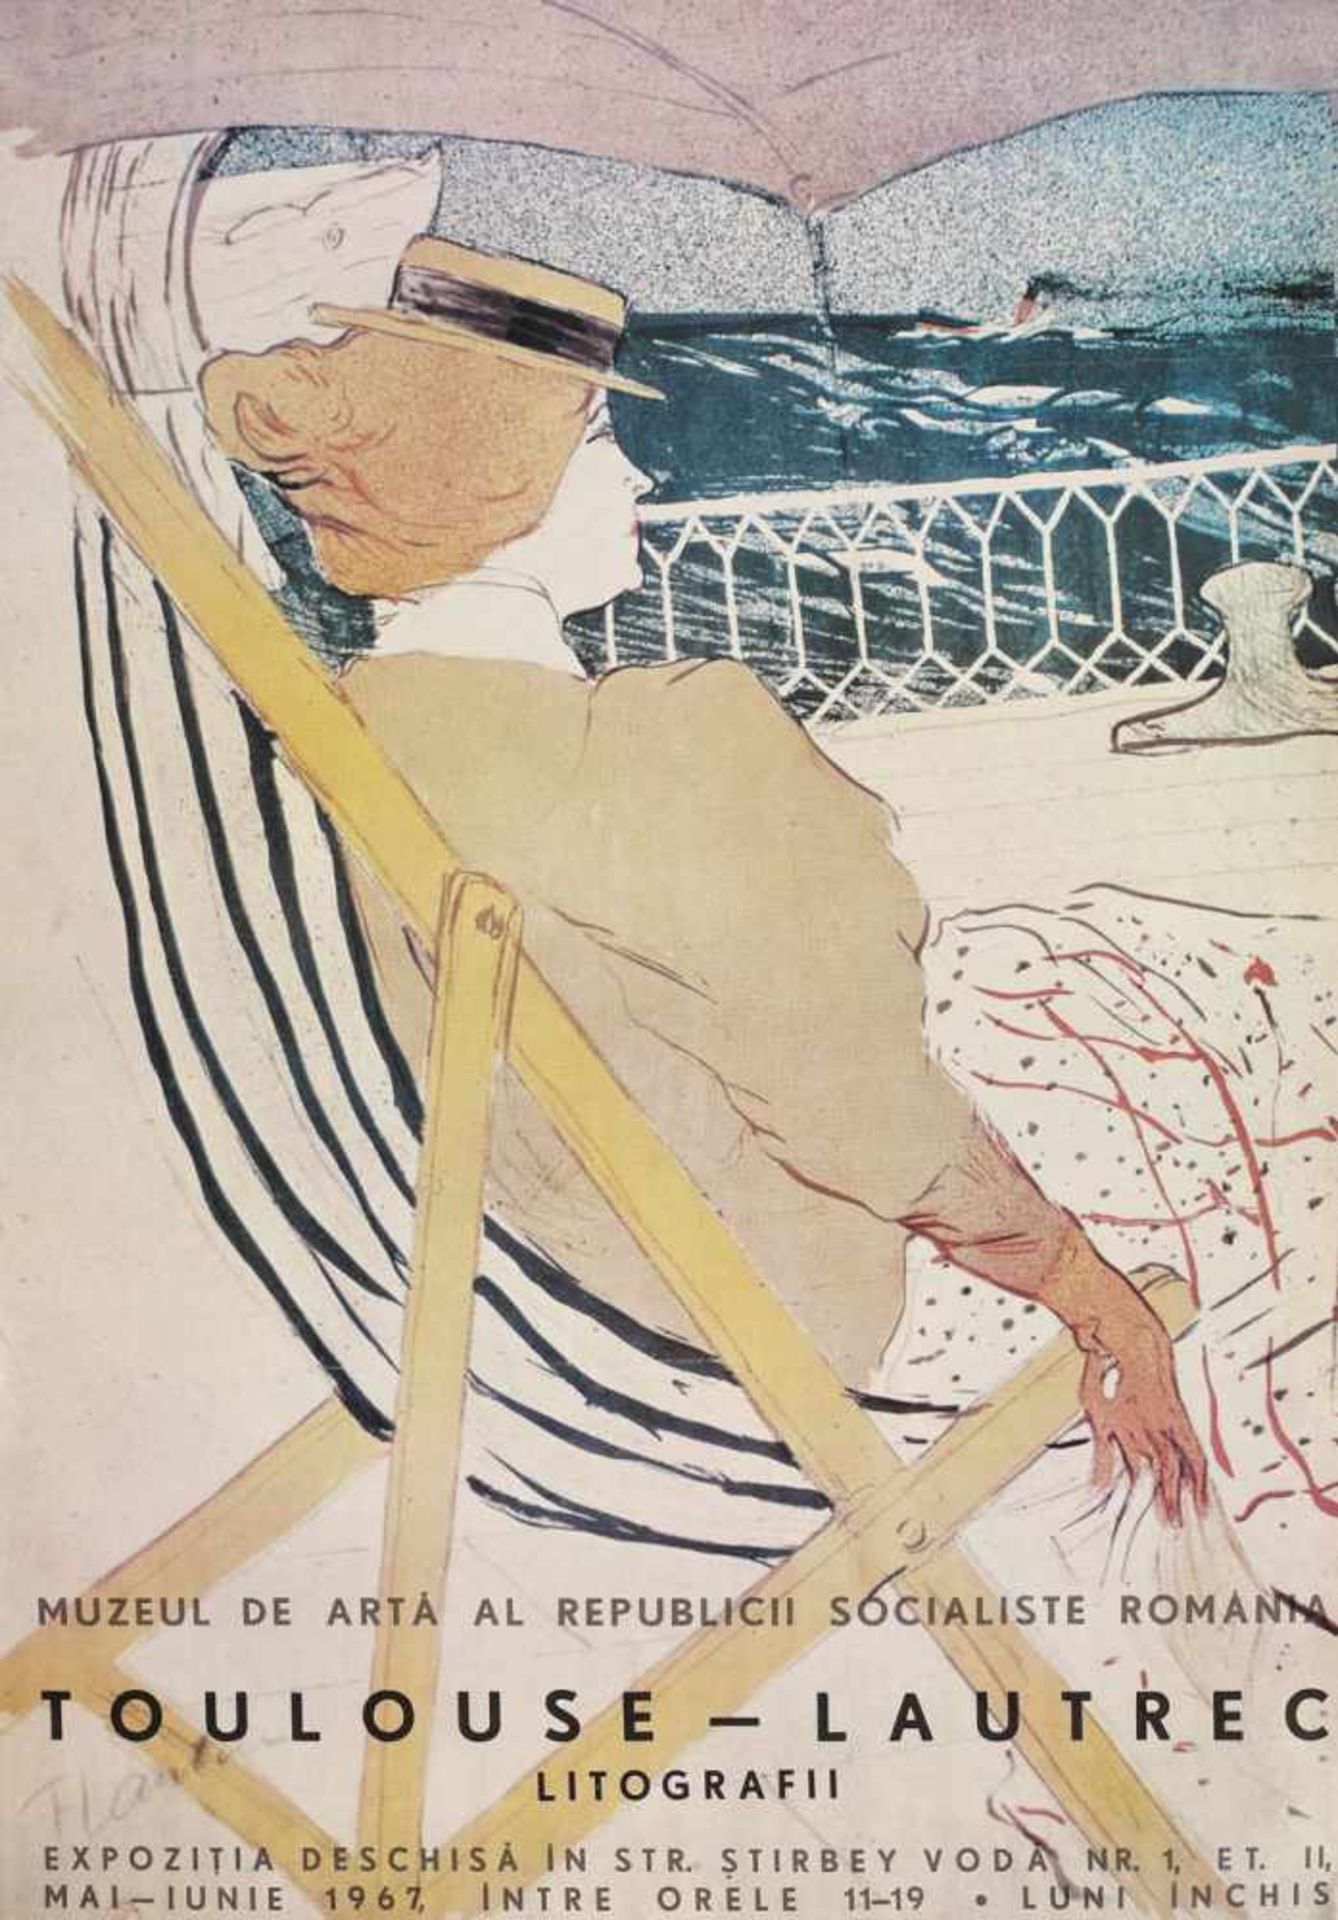 Toulouse-Lautrec - Lithographs, exhibiton poster, Art Museum of Socialist Republic of Romania, 1967